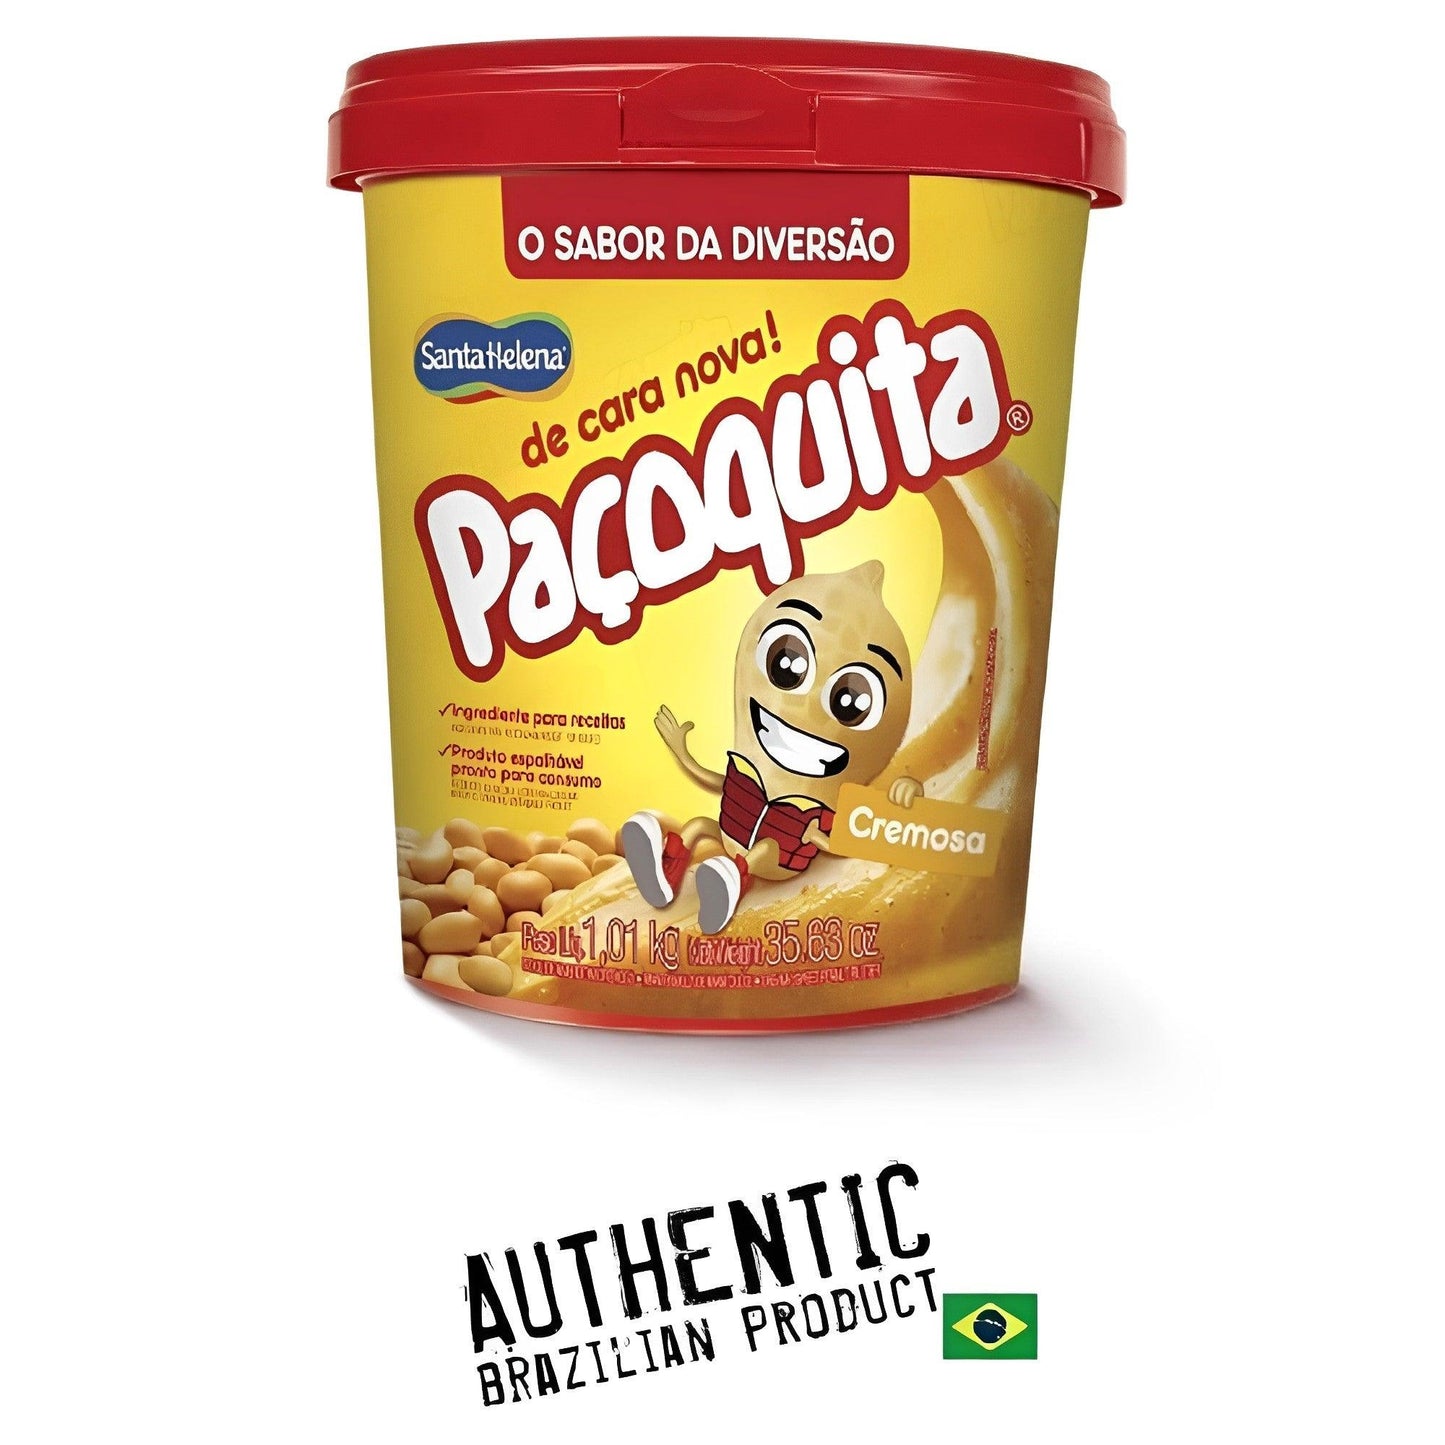 Paçoquita Creamy Brazilian Sweet Peanut Butter 35.62 oz. (1.01kg) - Brazilian Shop